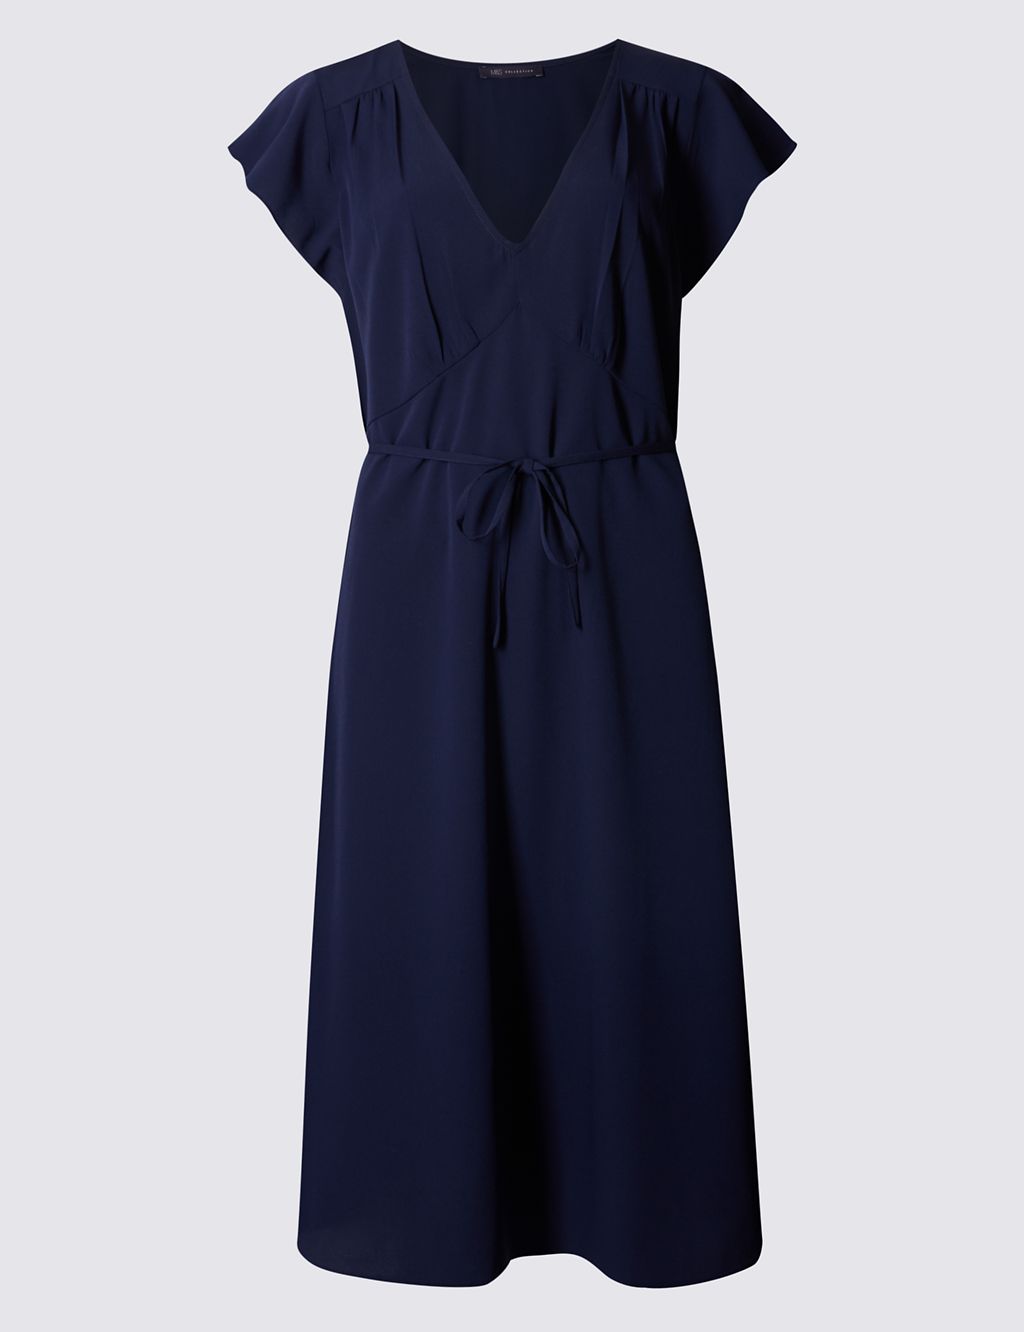 Lace Trim Tunic Short Sleeve Dress 1 of 4